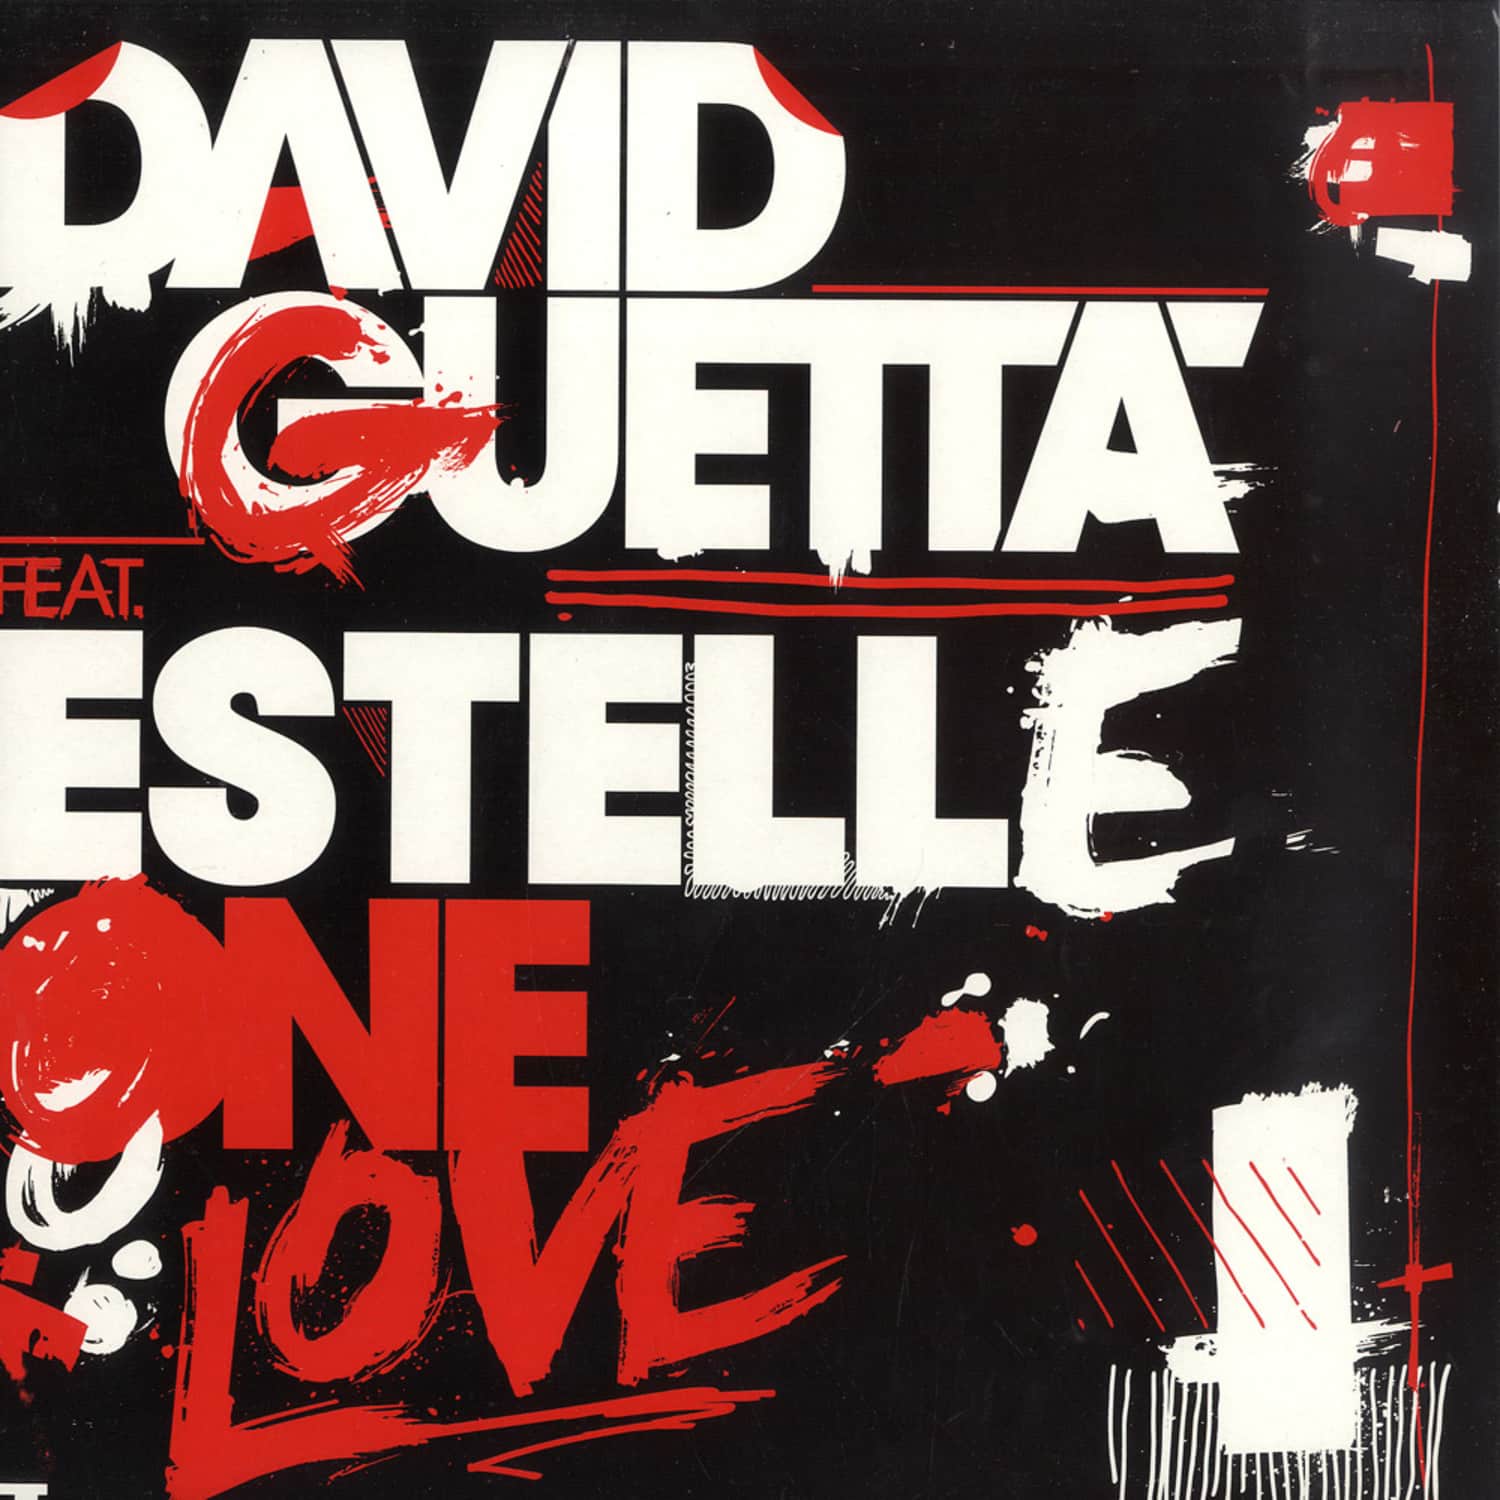 David Guetta feat Estelle - One love